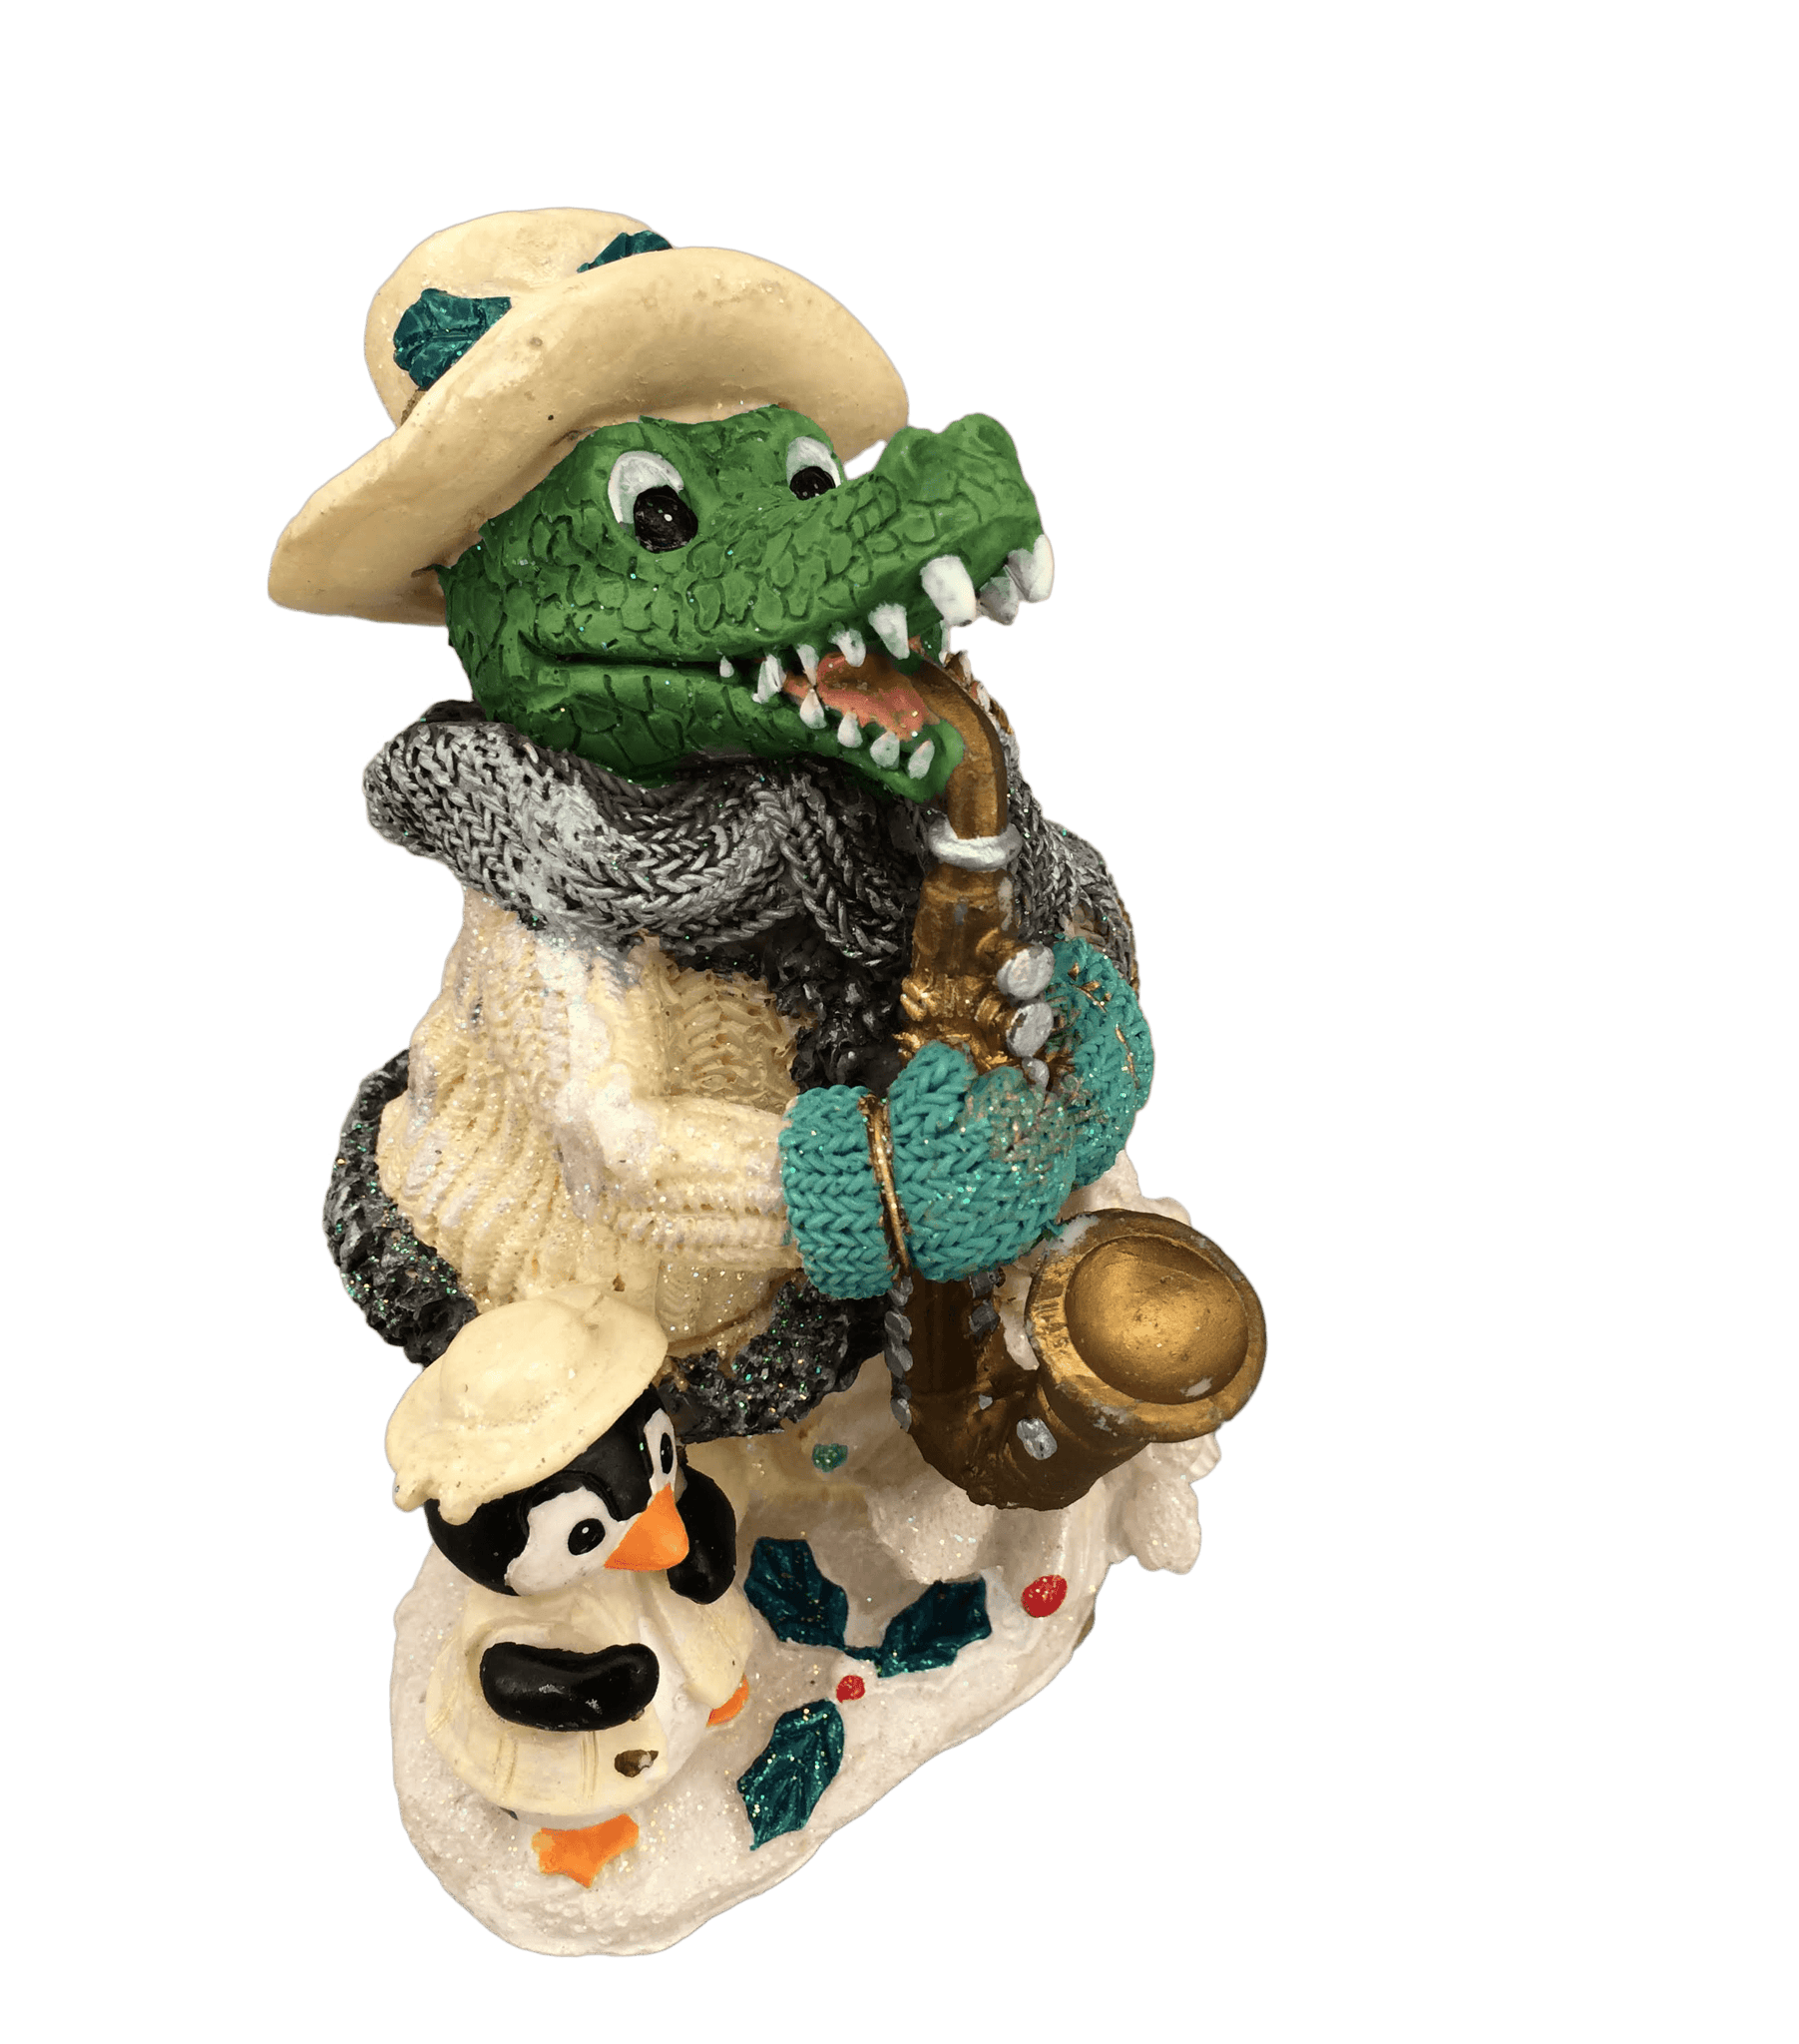 Alligator in sweater & saxophone